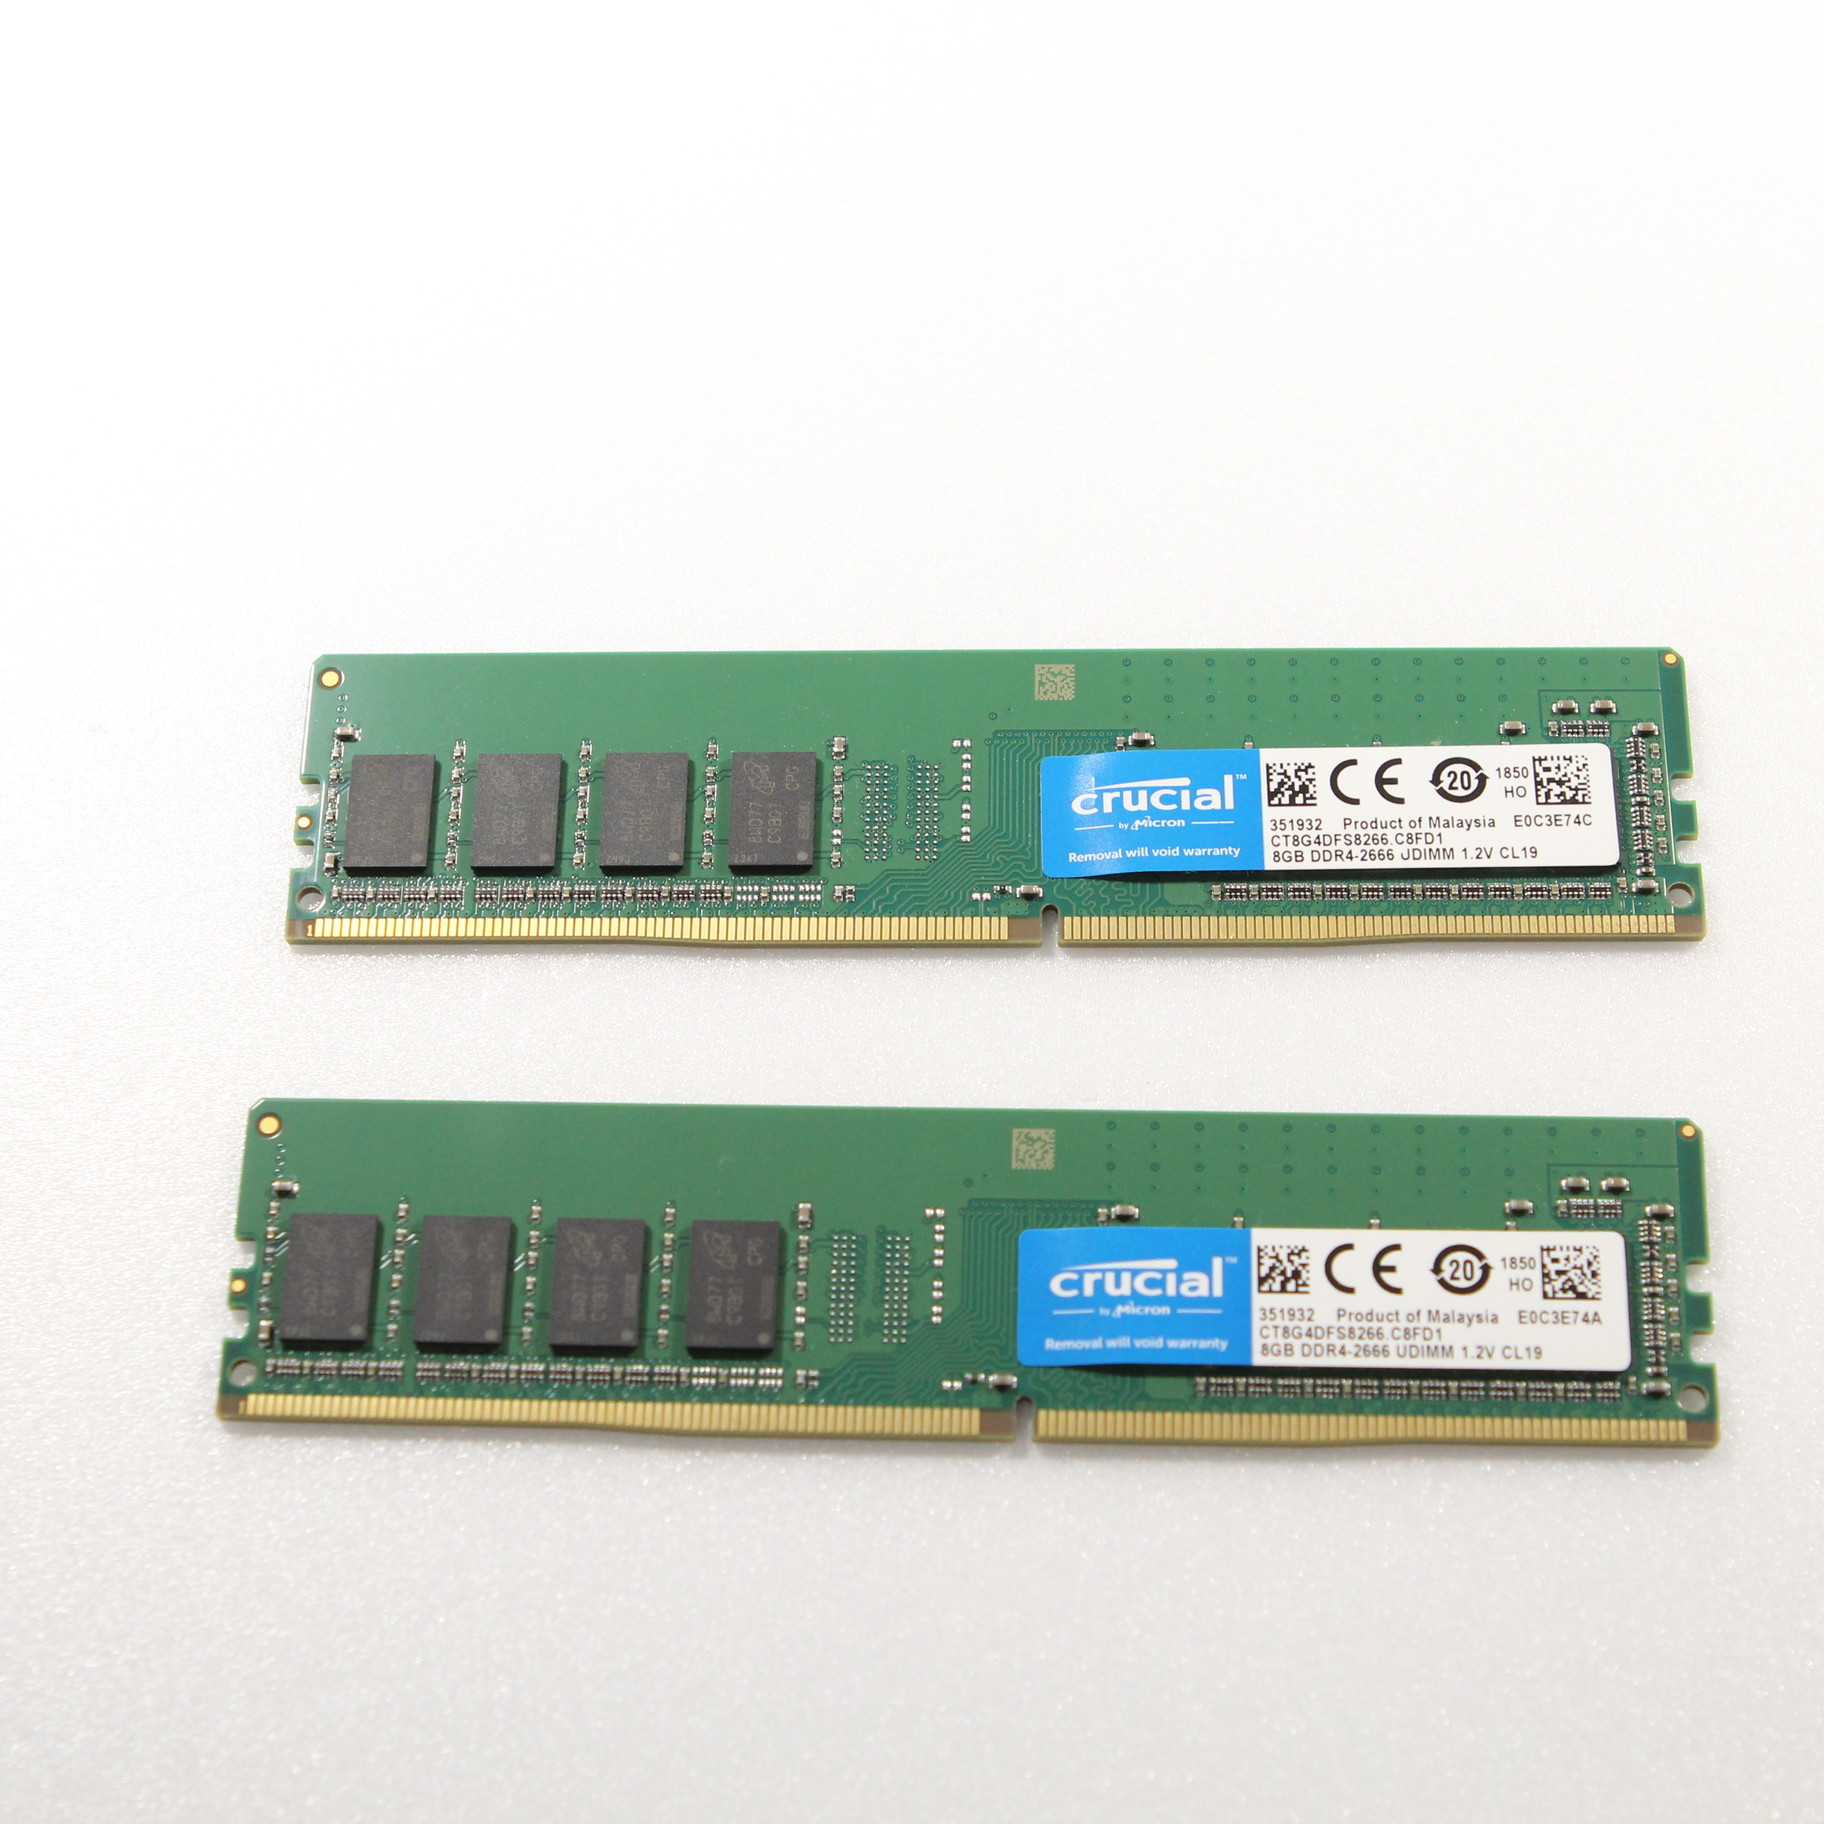 中古】288P PC4-21300 DDR4-2666 16GB 8GB×2枚組 [2133040161023 ...